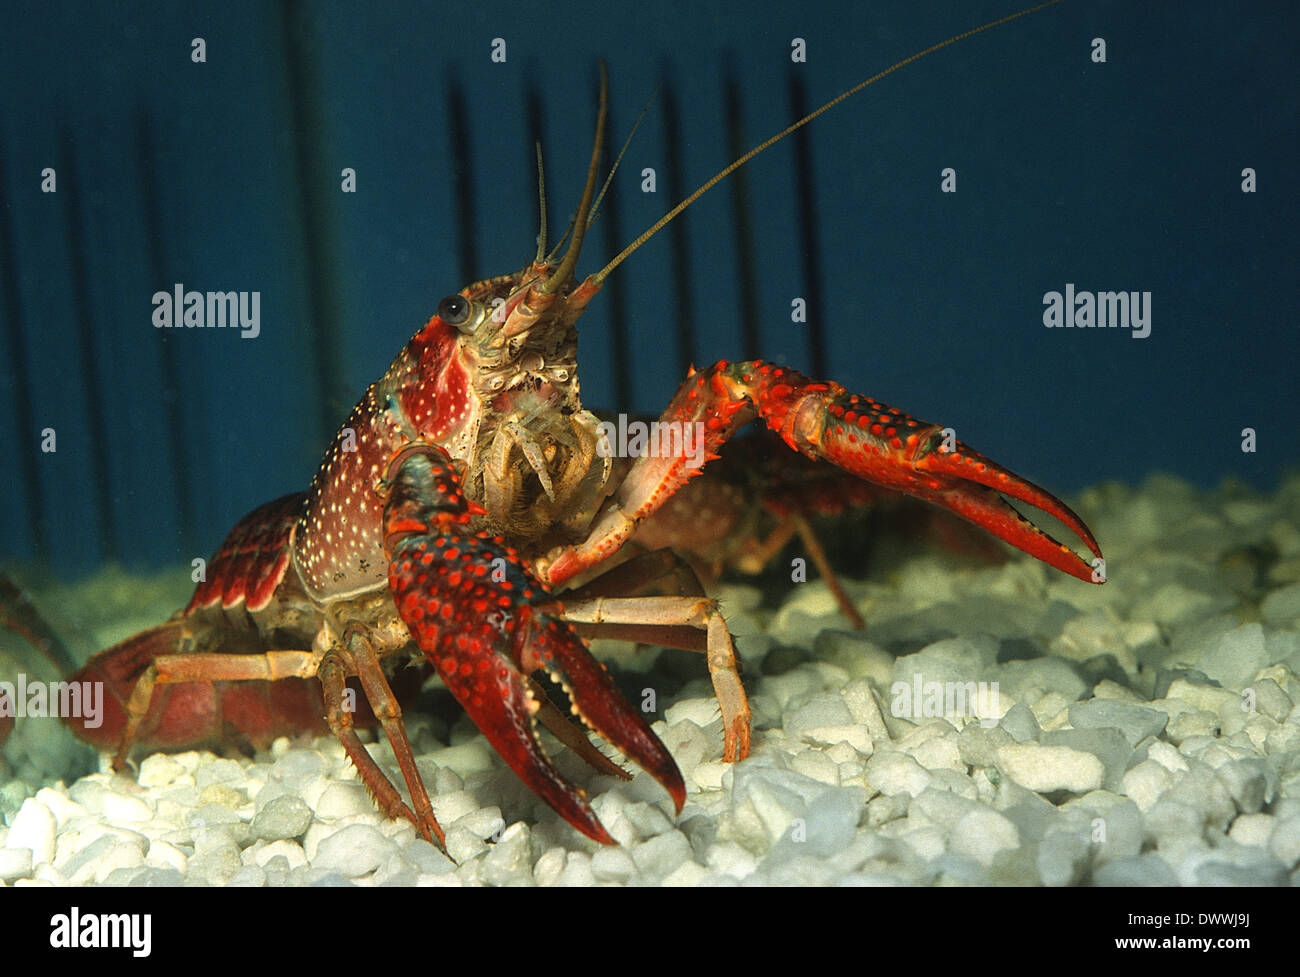 Red Swamp Crayfish (Procambarus clarkii), Cambaridae USA, Europe, Crustacea Decapoda Stock Photo